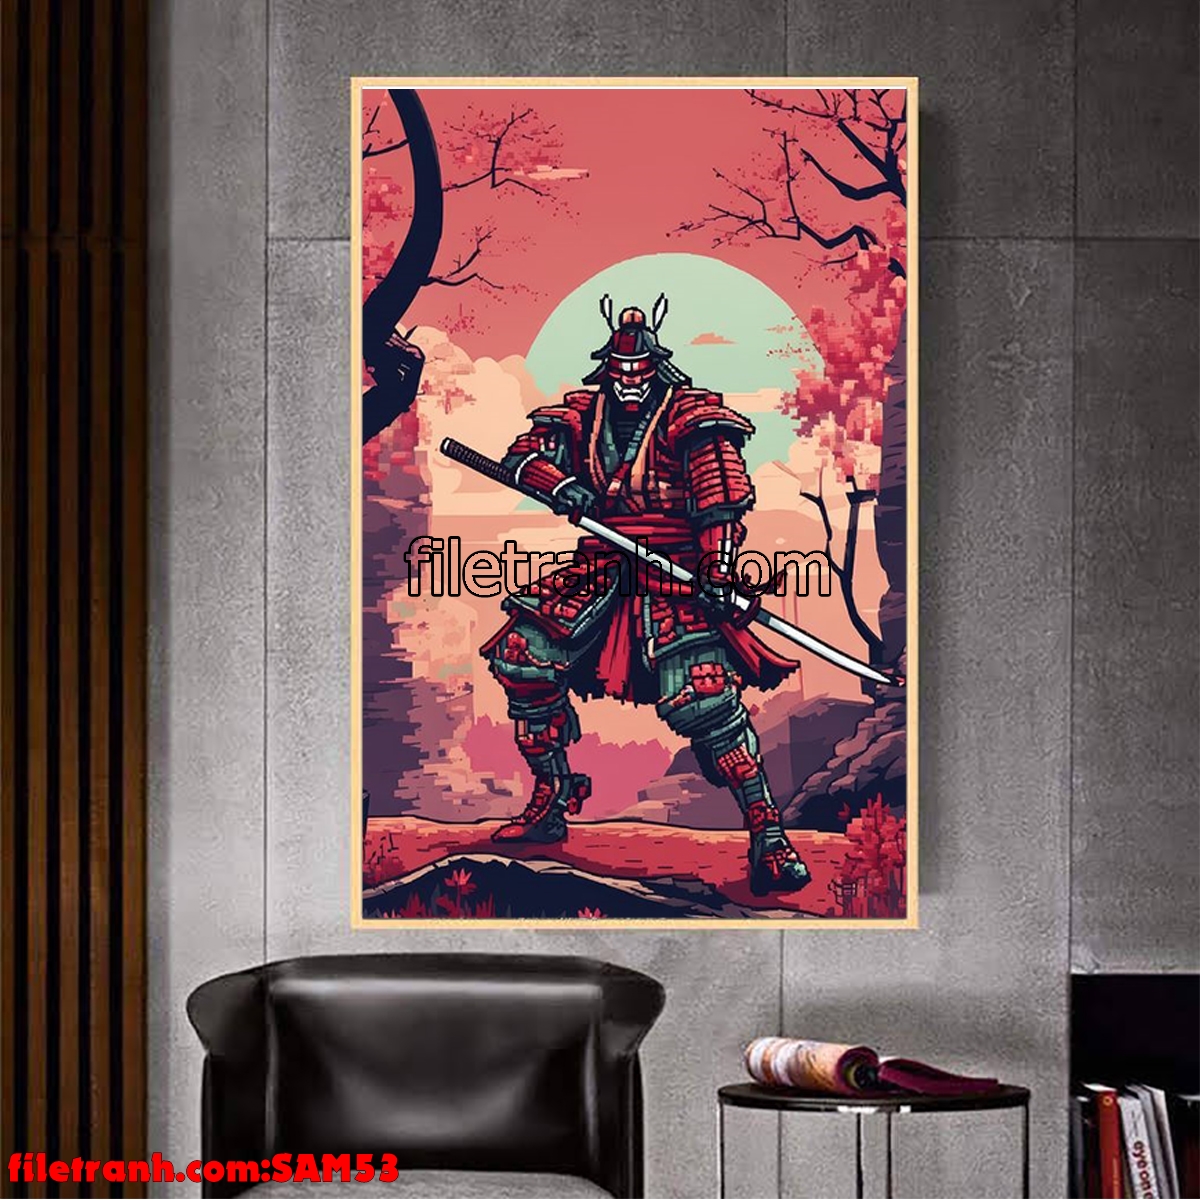 https://filetranh.com/samurai/file-tranh-samurai-vo-si-nhat-ban-sam53.html